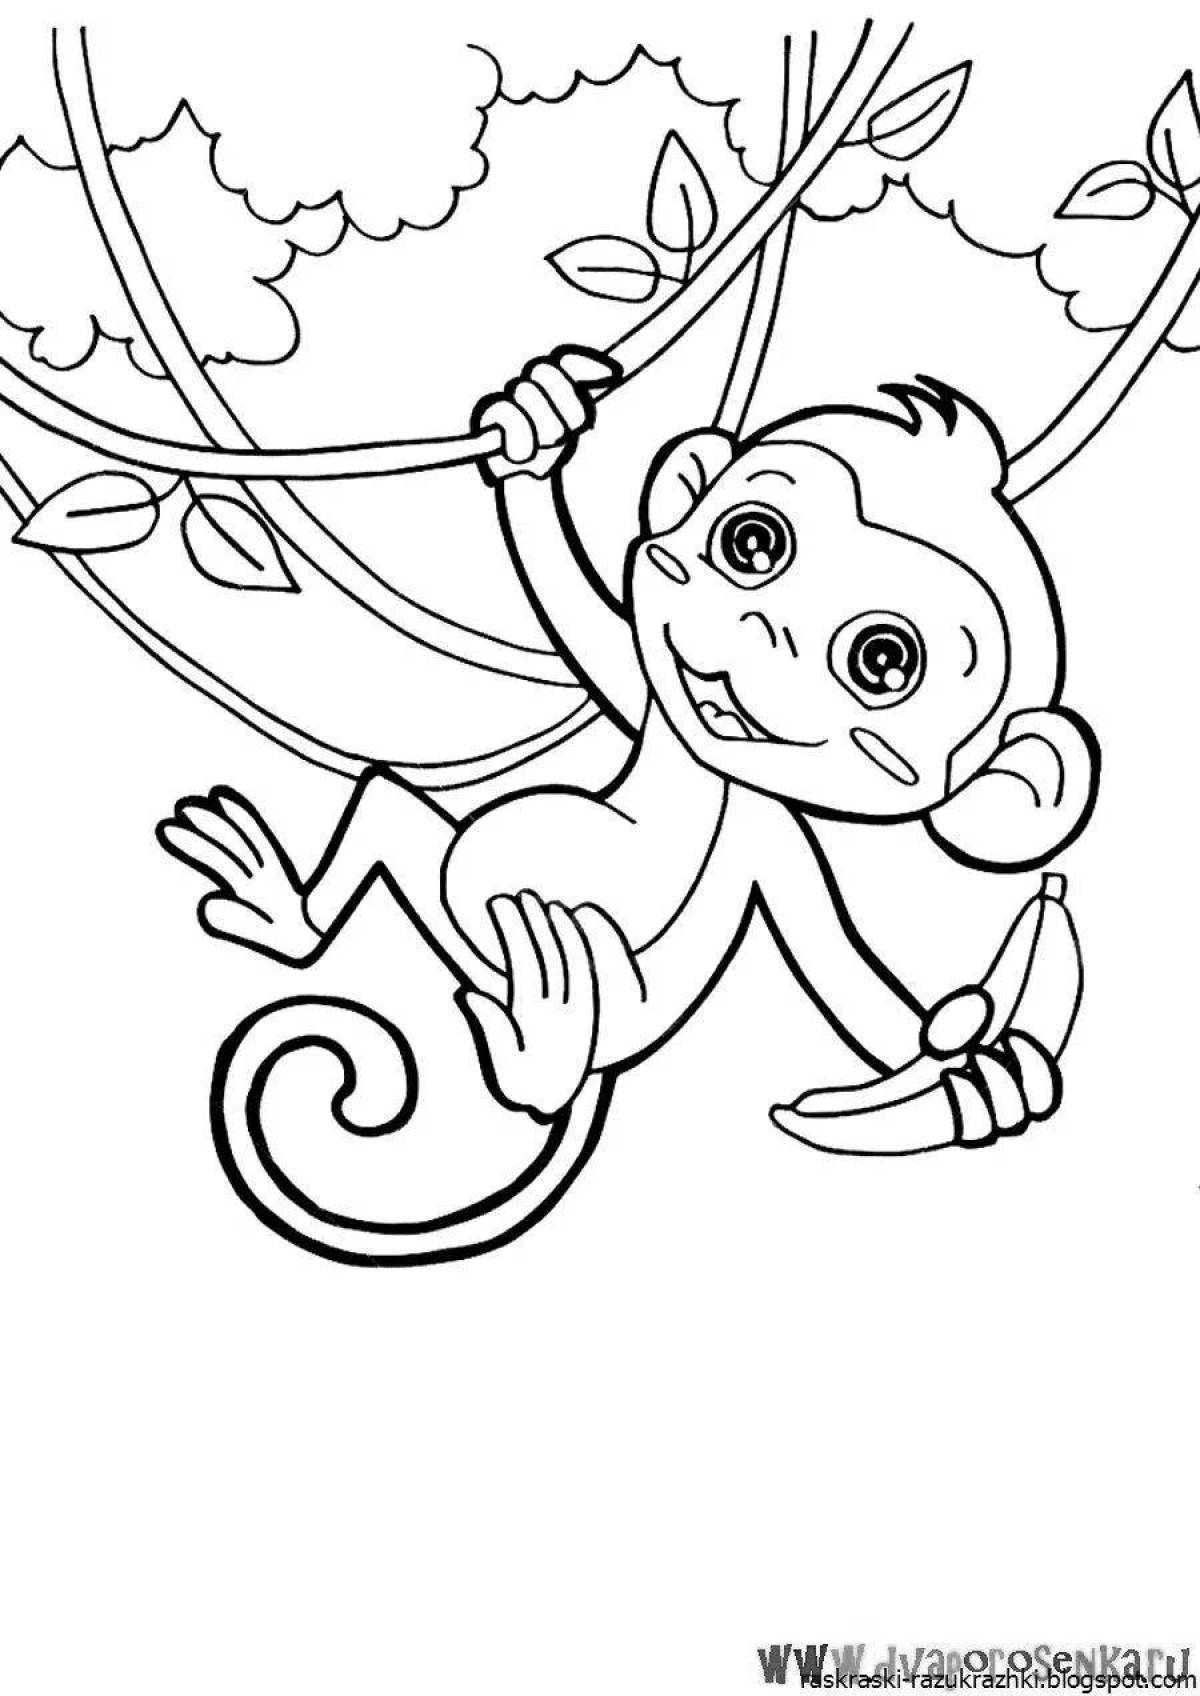 Live coloring monkey